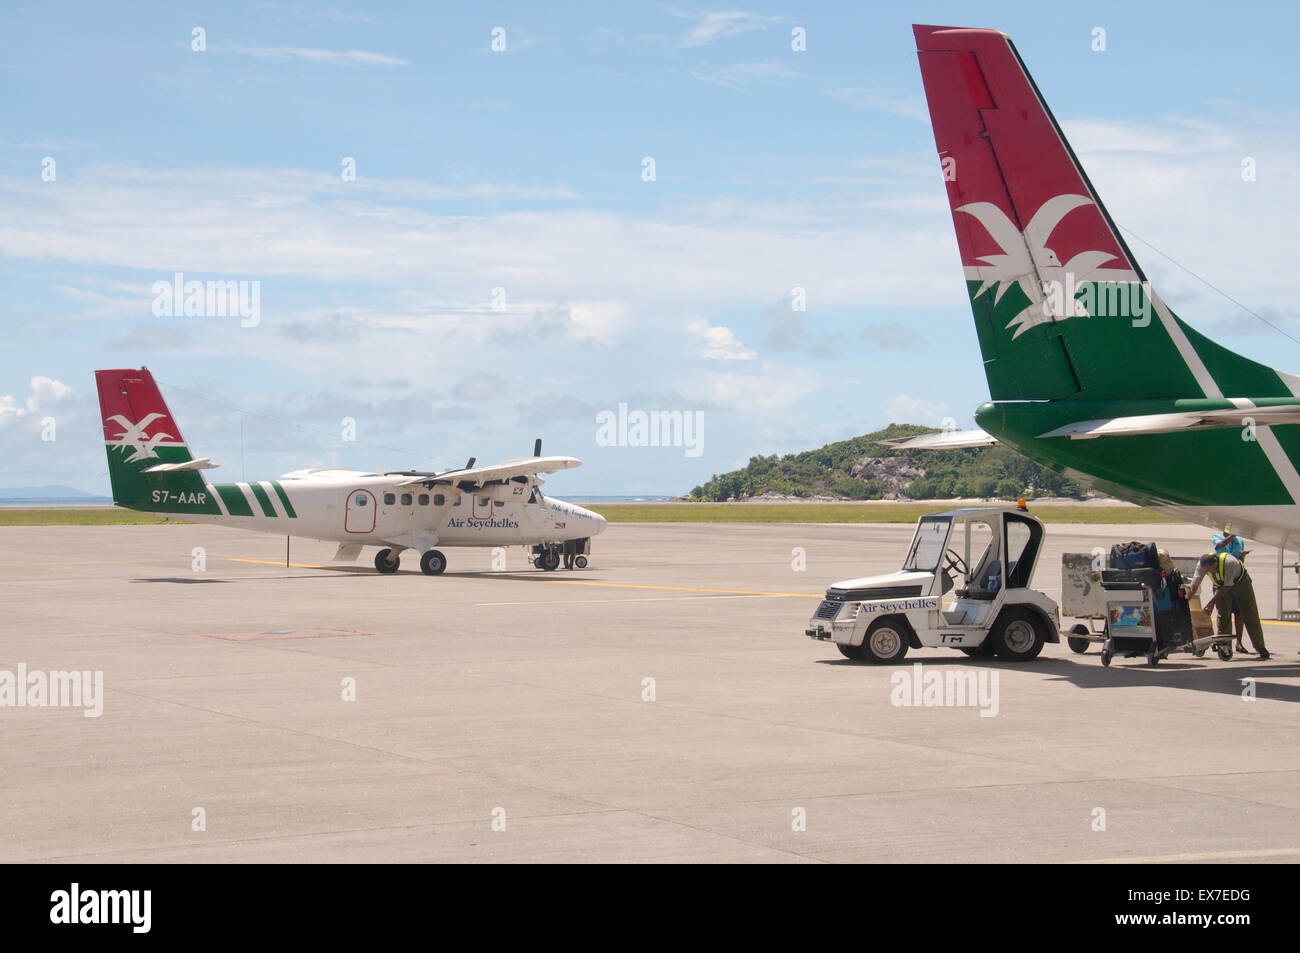 Aircraft at the airport, Mahe island, Indian Ocean, Seychelles Stock Photo